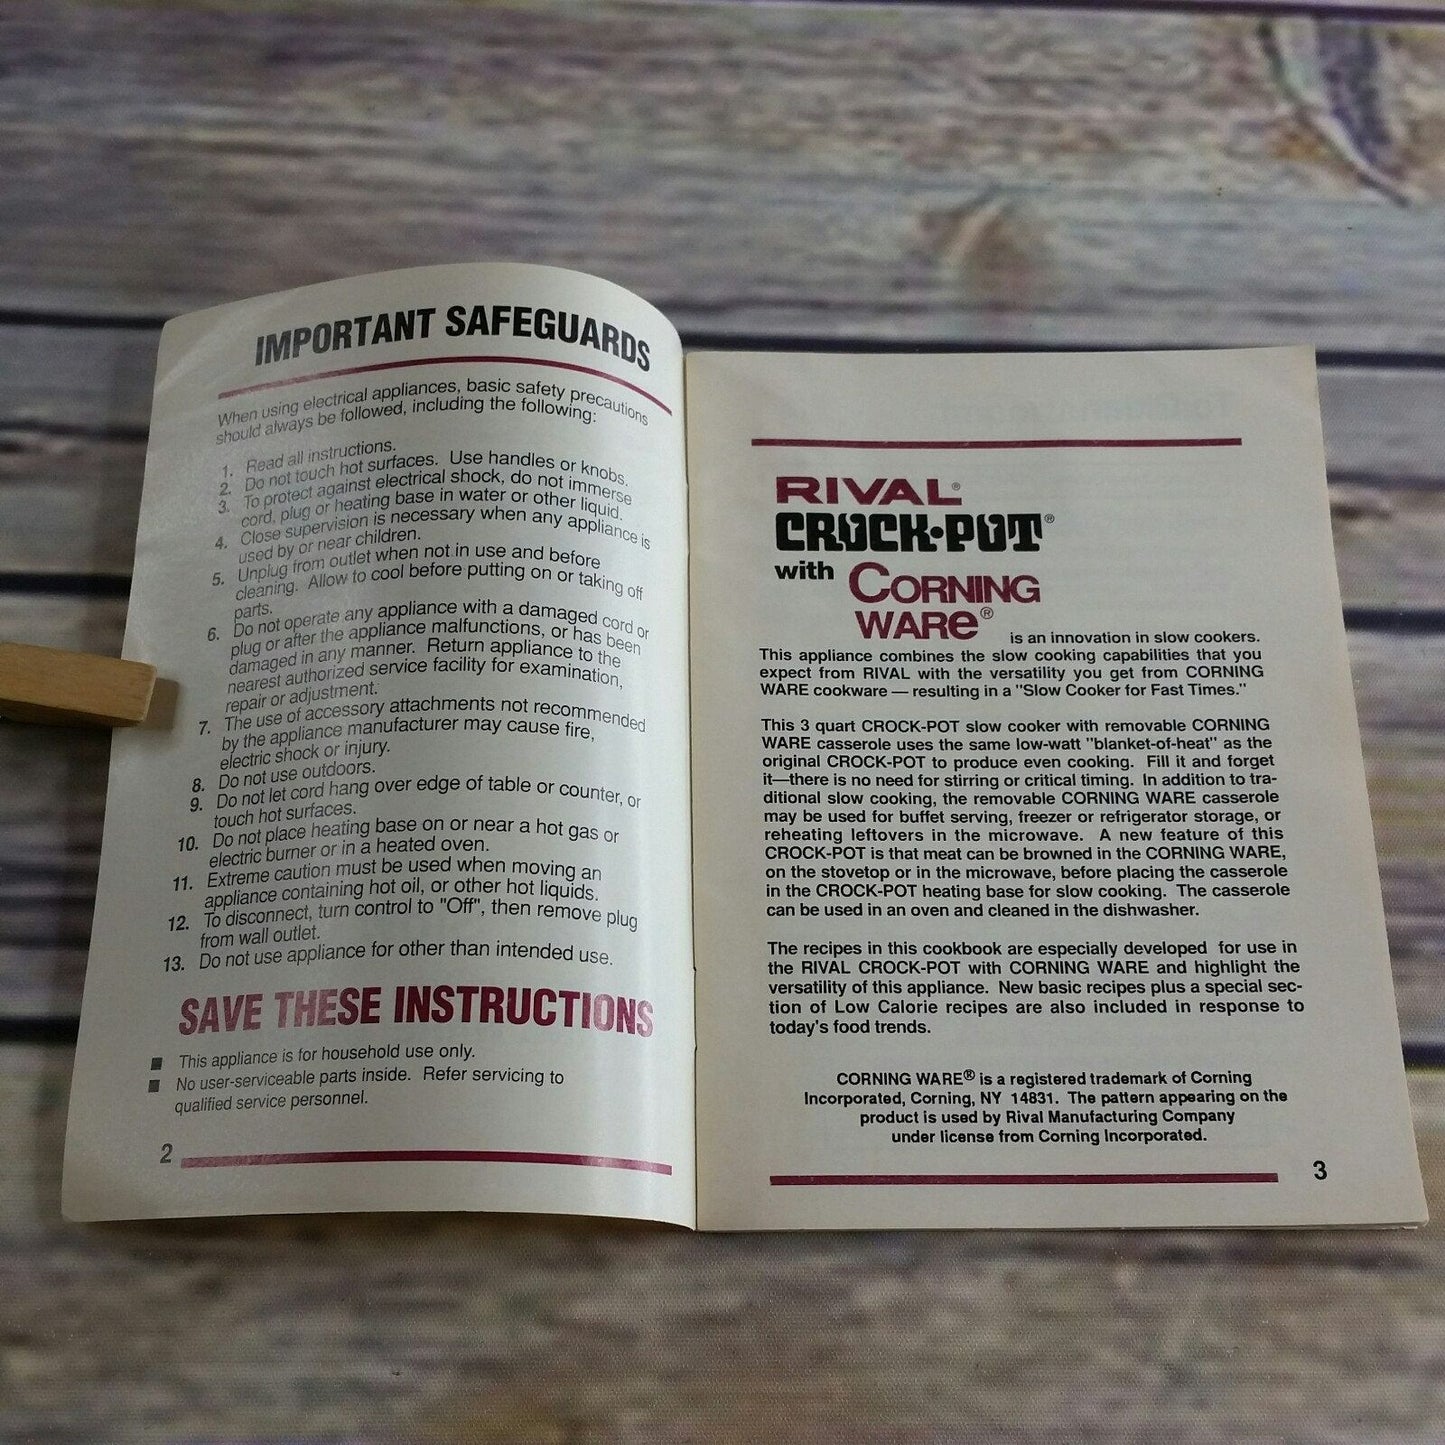 Vintage Rival Crock Pot Cookbook Owner's Manual Recipes Slow Cooker with Corning Ware 1989 Booklet 427-958 3 Quart Model 3753